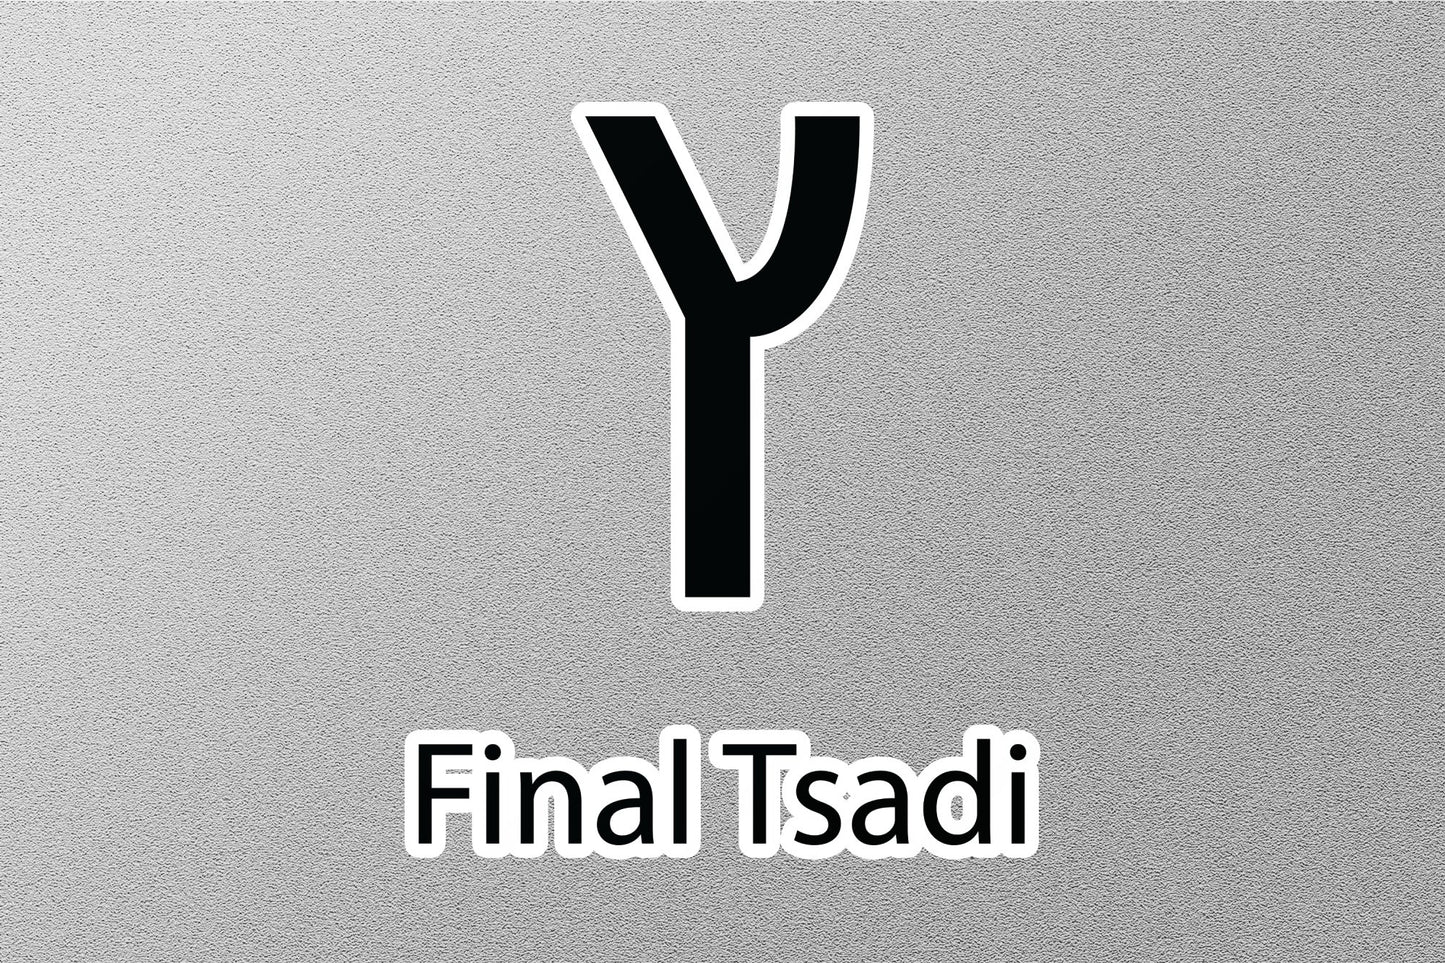 Final Tsadi Hebrew Alphabet Sticker